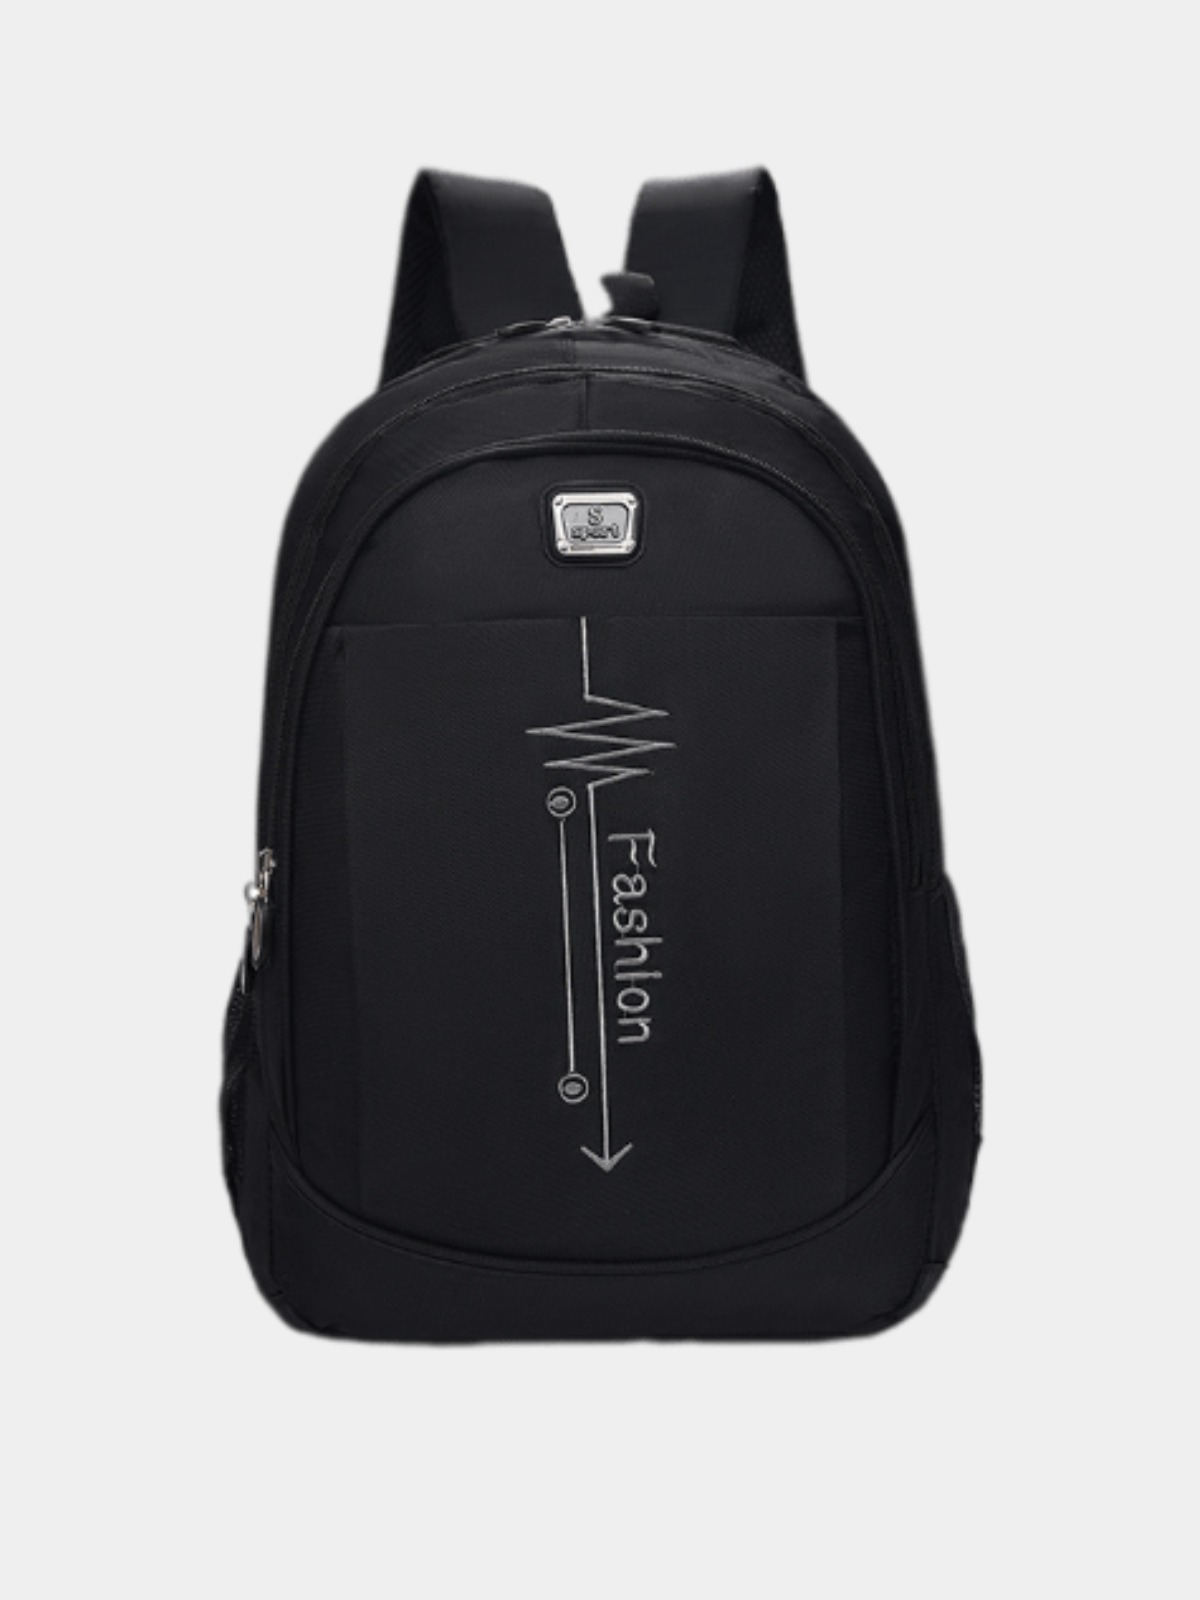 Рюкзак унисекс СумС146 черный/серый, 46х30х15 см